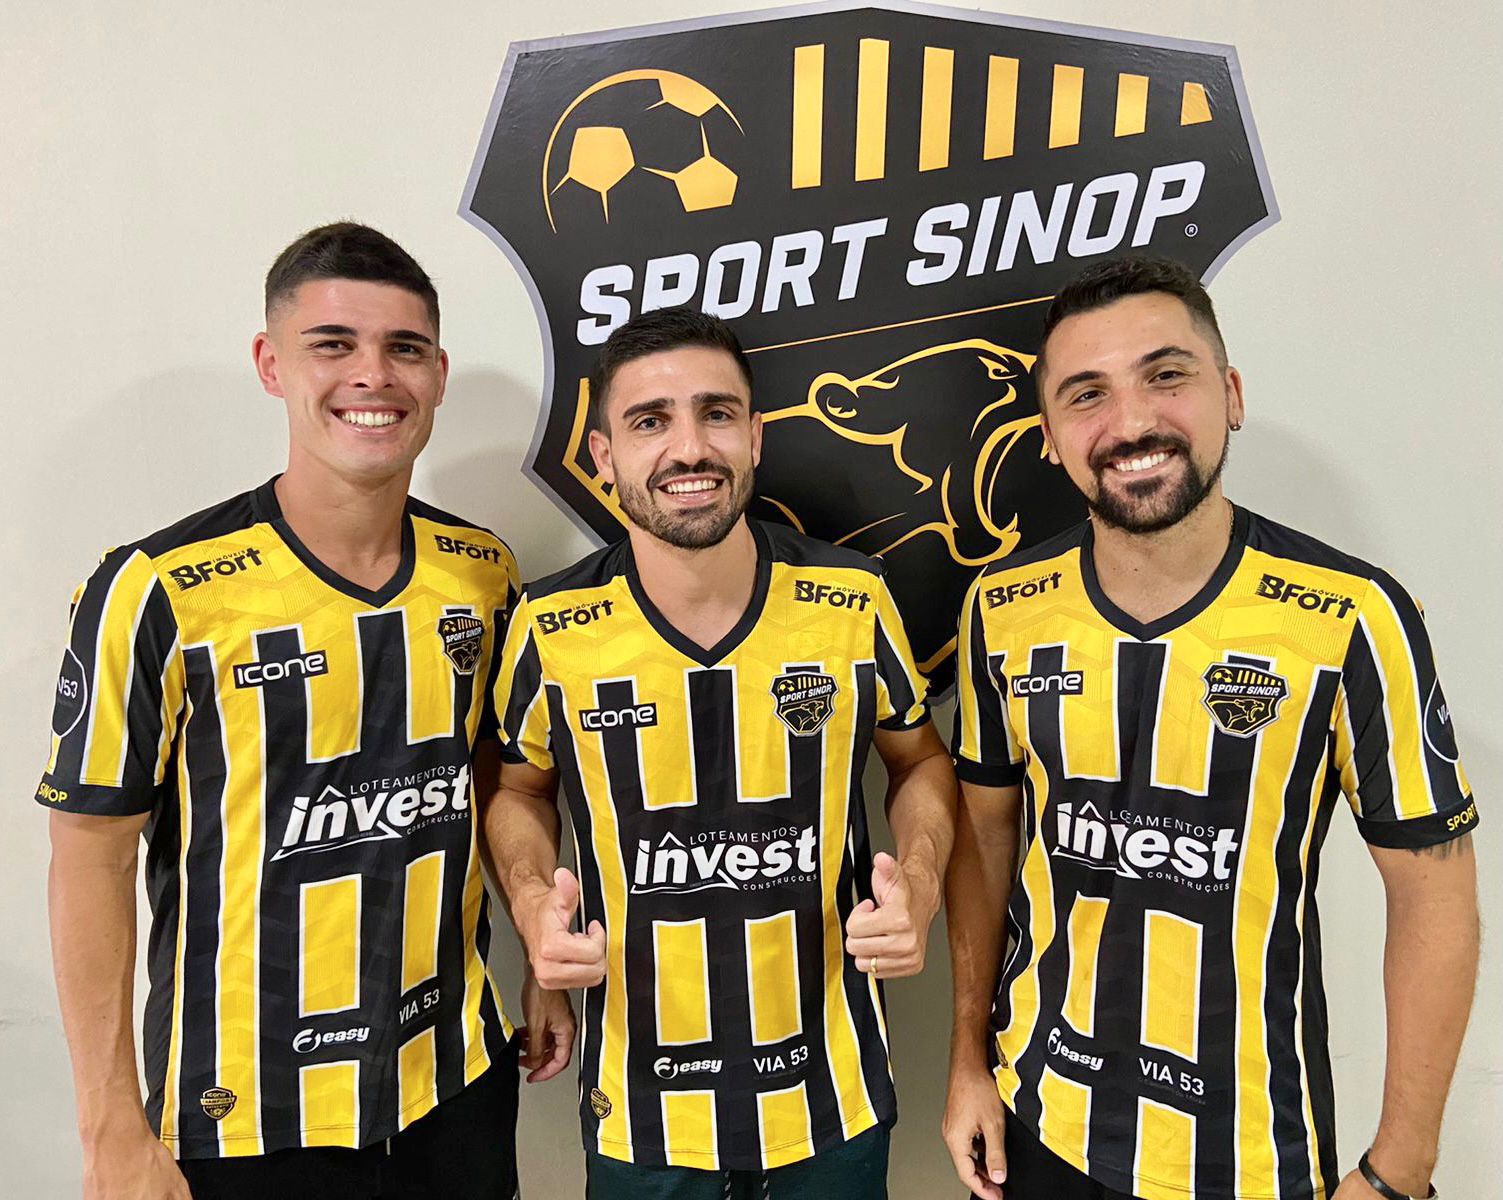 Sport Sinop contrata ex-fluminense para completar equipe de ataque 5